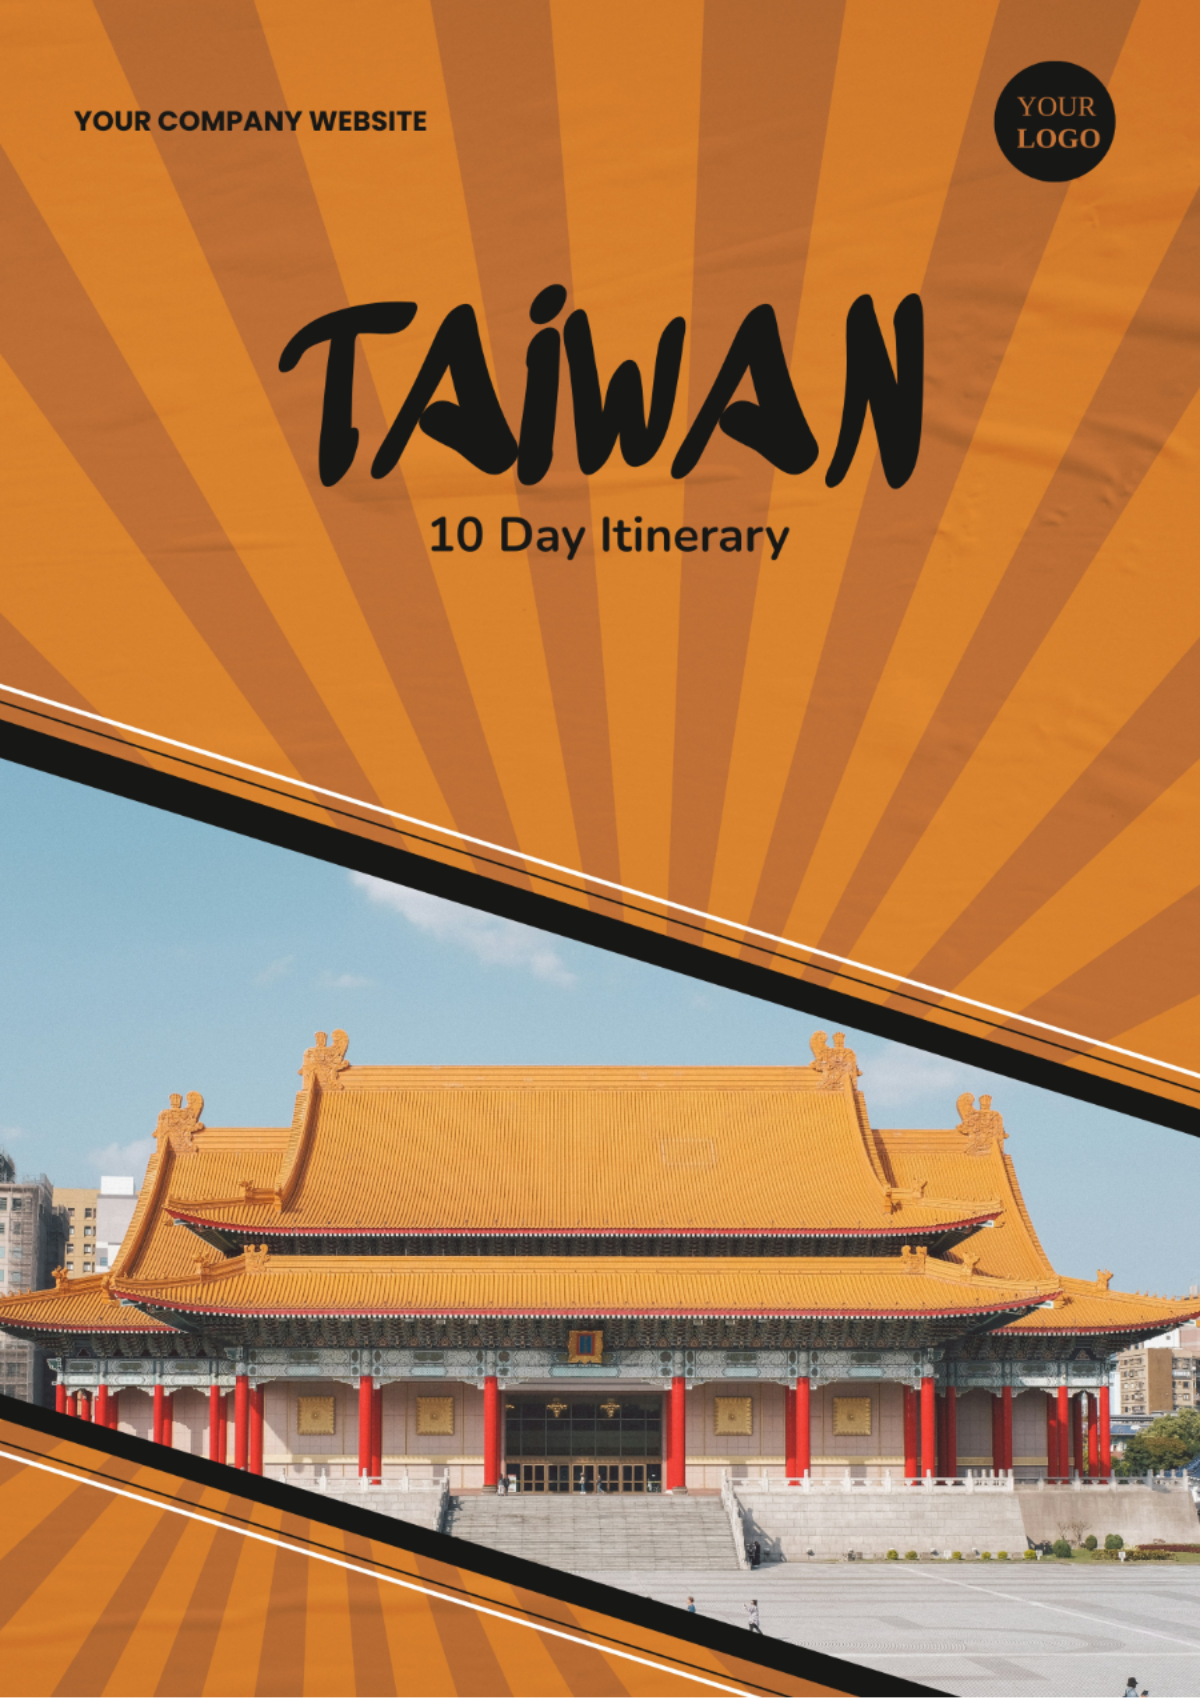 10 Day Taiwan Itinerary Template